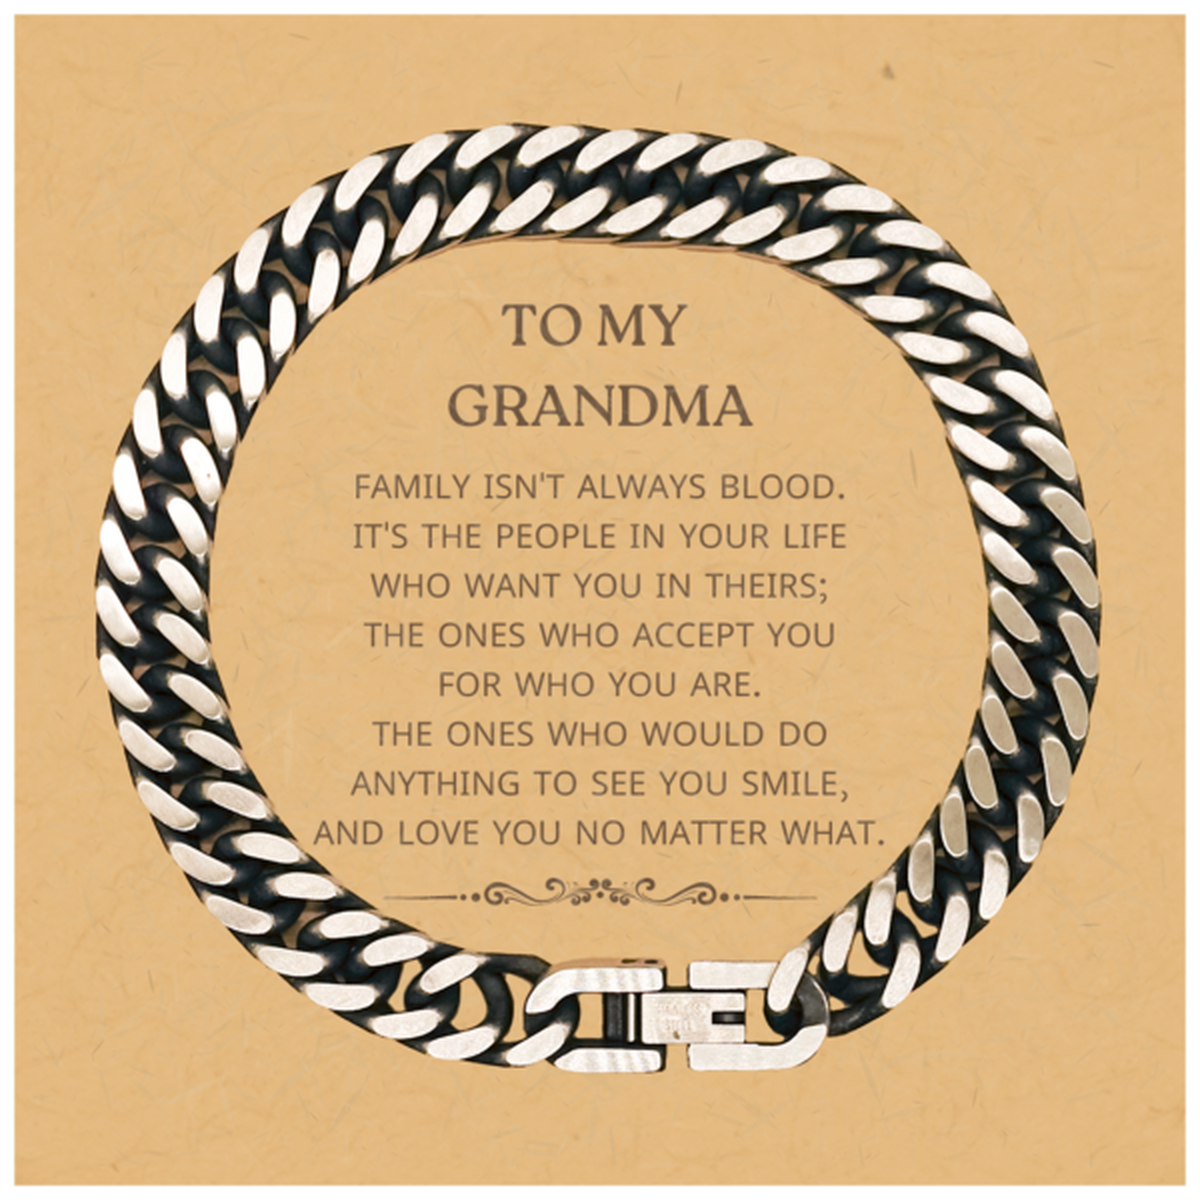 To My Grandma Gifts, Family isn't always blood, Grandma Cuban Link Chain Bracelet, Birthday Christmas Unique Present For Grandma